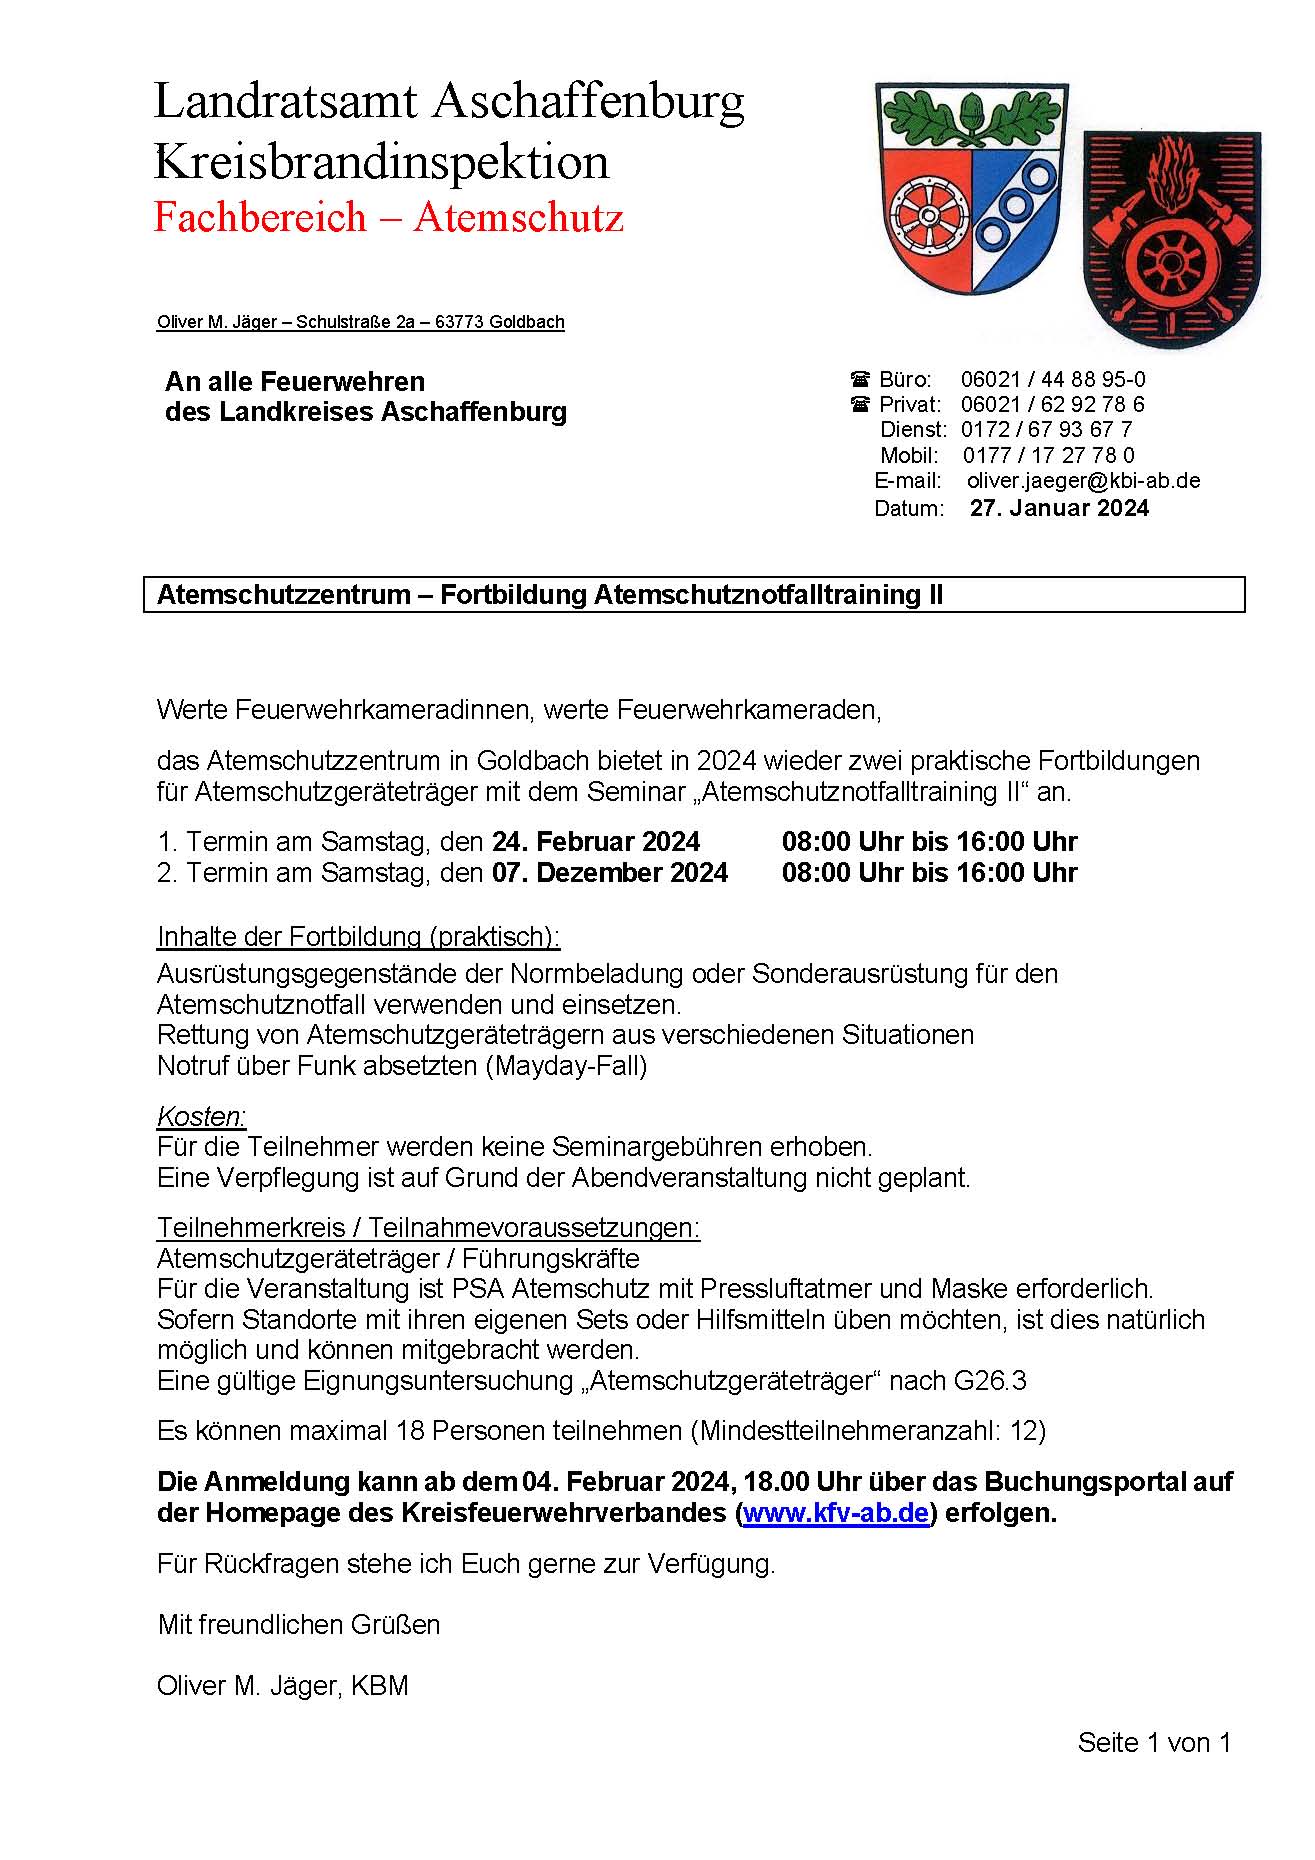 Einladung ASZ Fortbildung Atemschutznotfalltraining II 2024